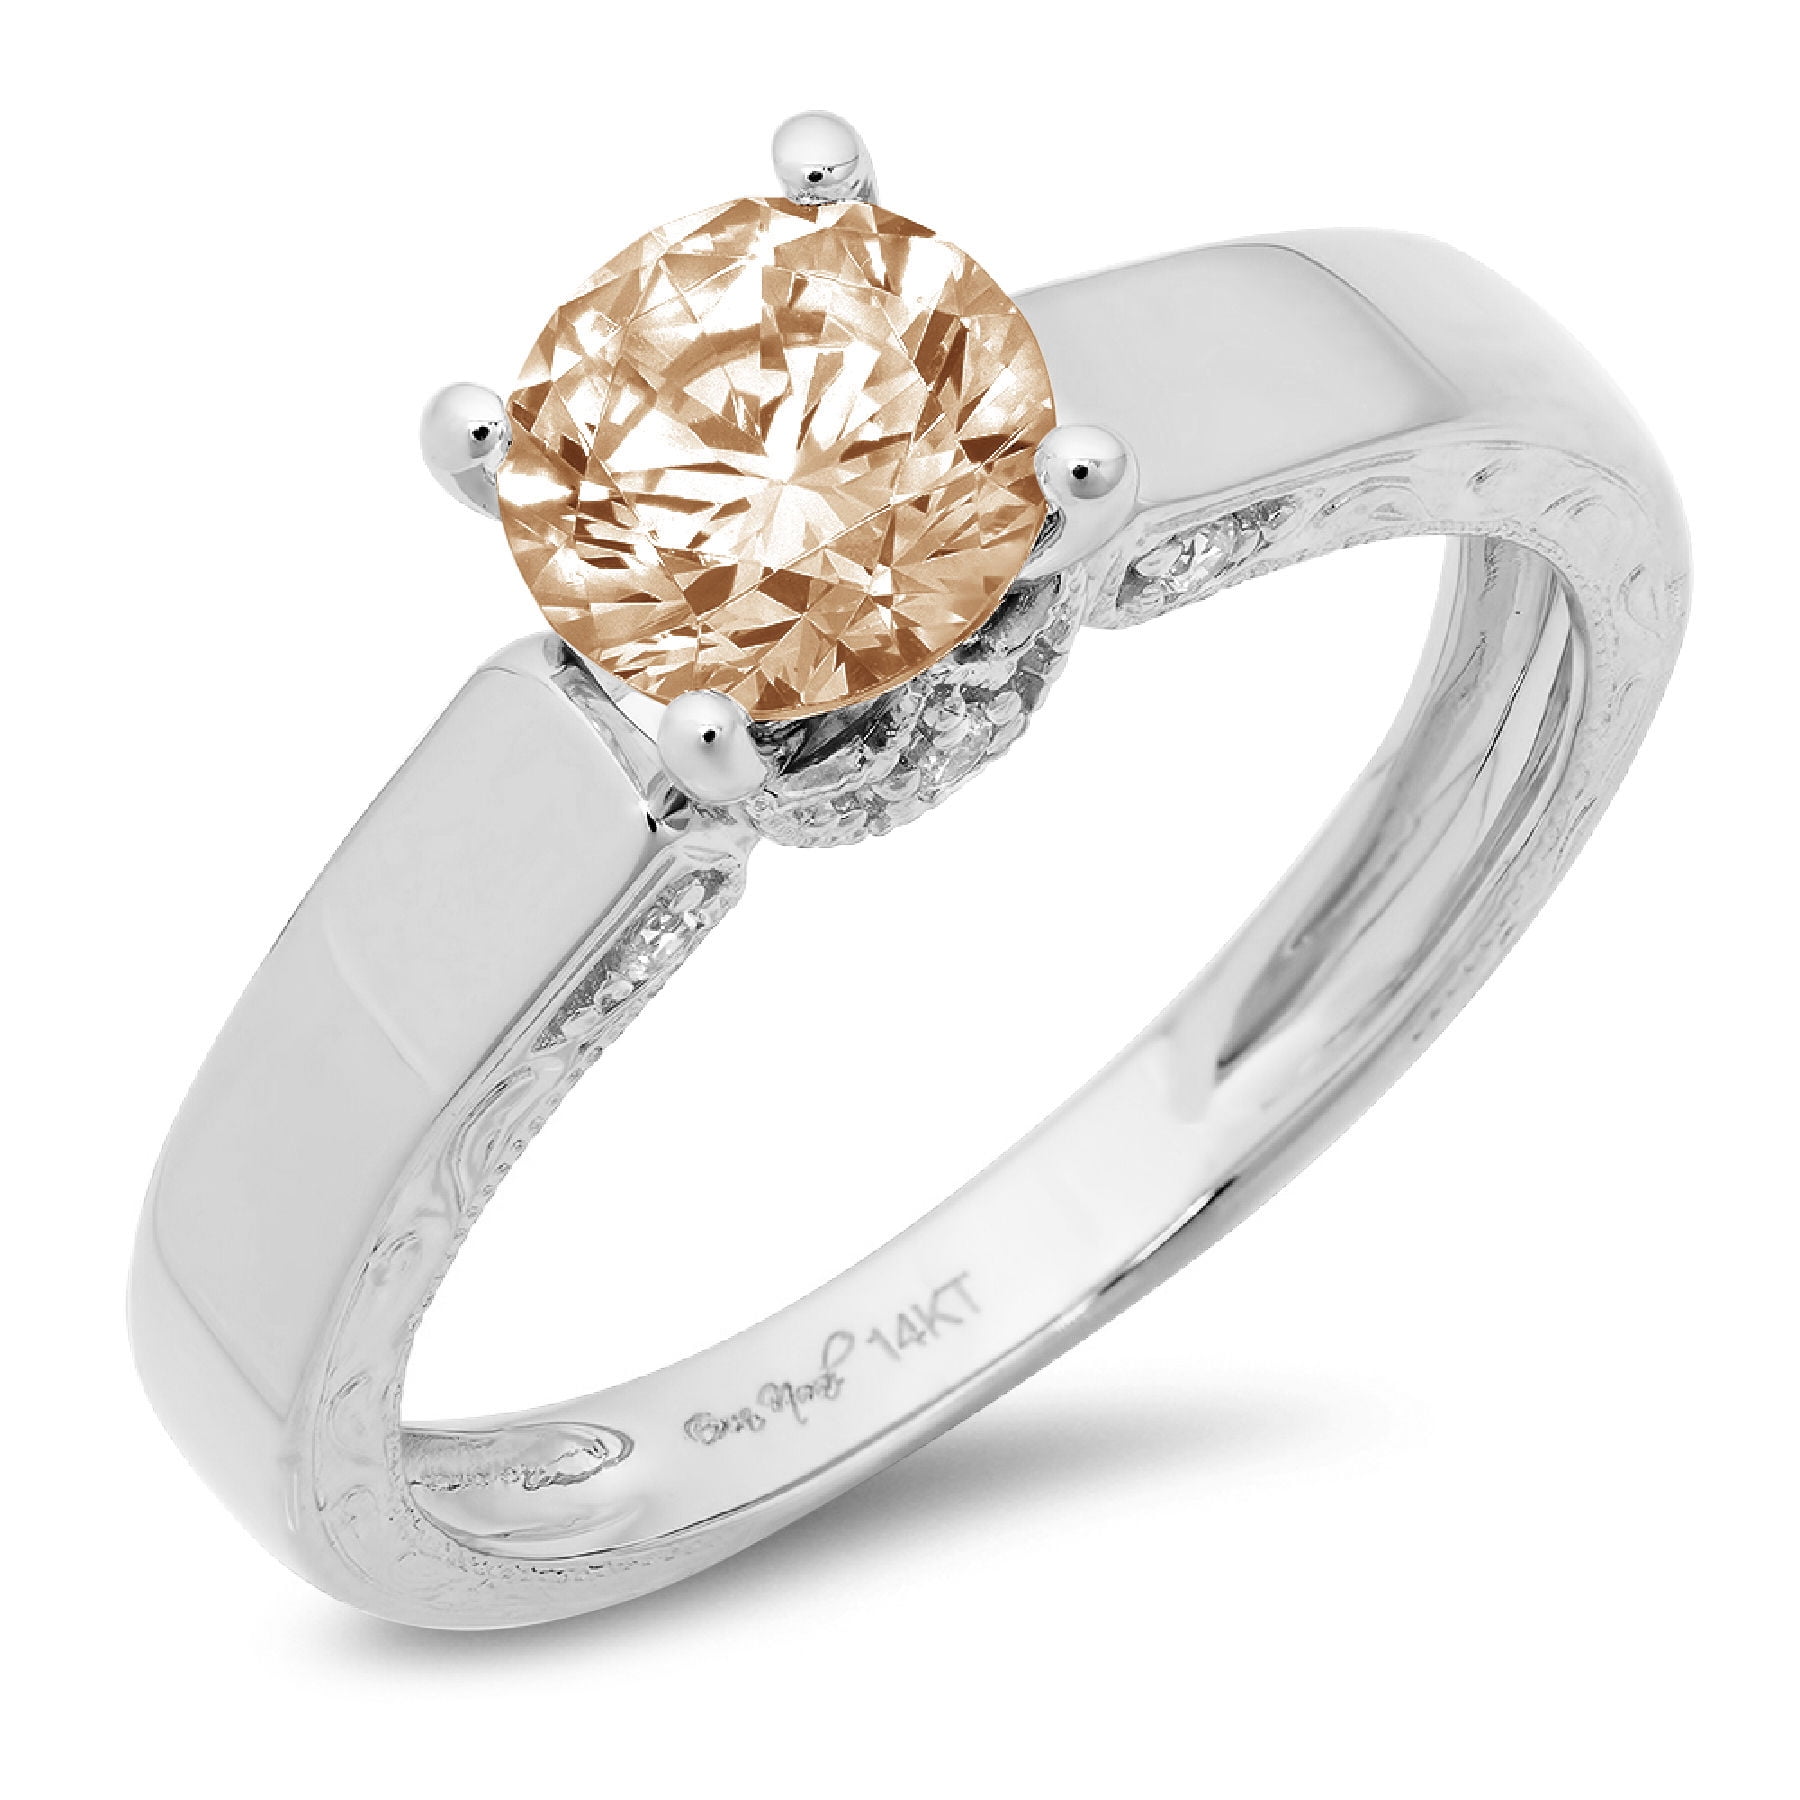 Details about   2Ct Round Cut D/VVS1 Diamond Engagement Wedding Ring 14K White Gold Finish 